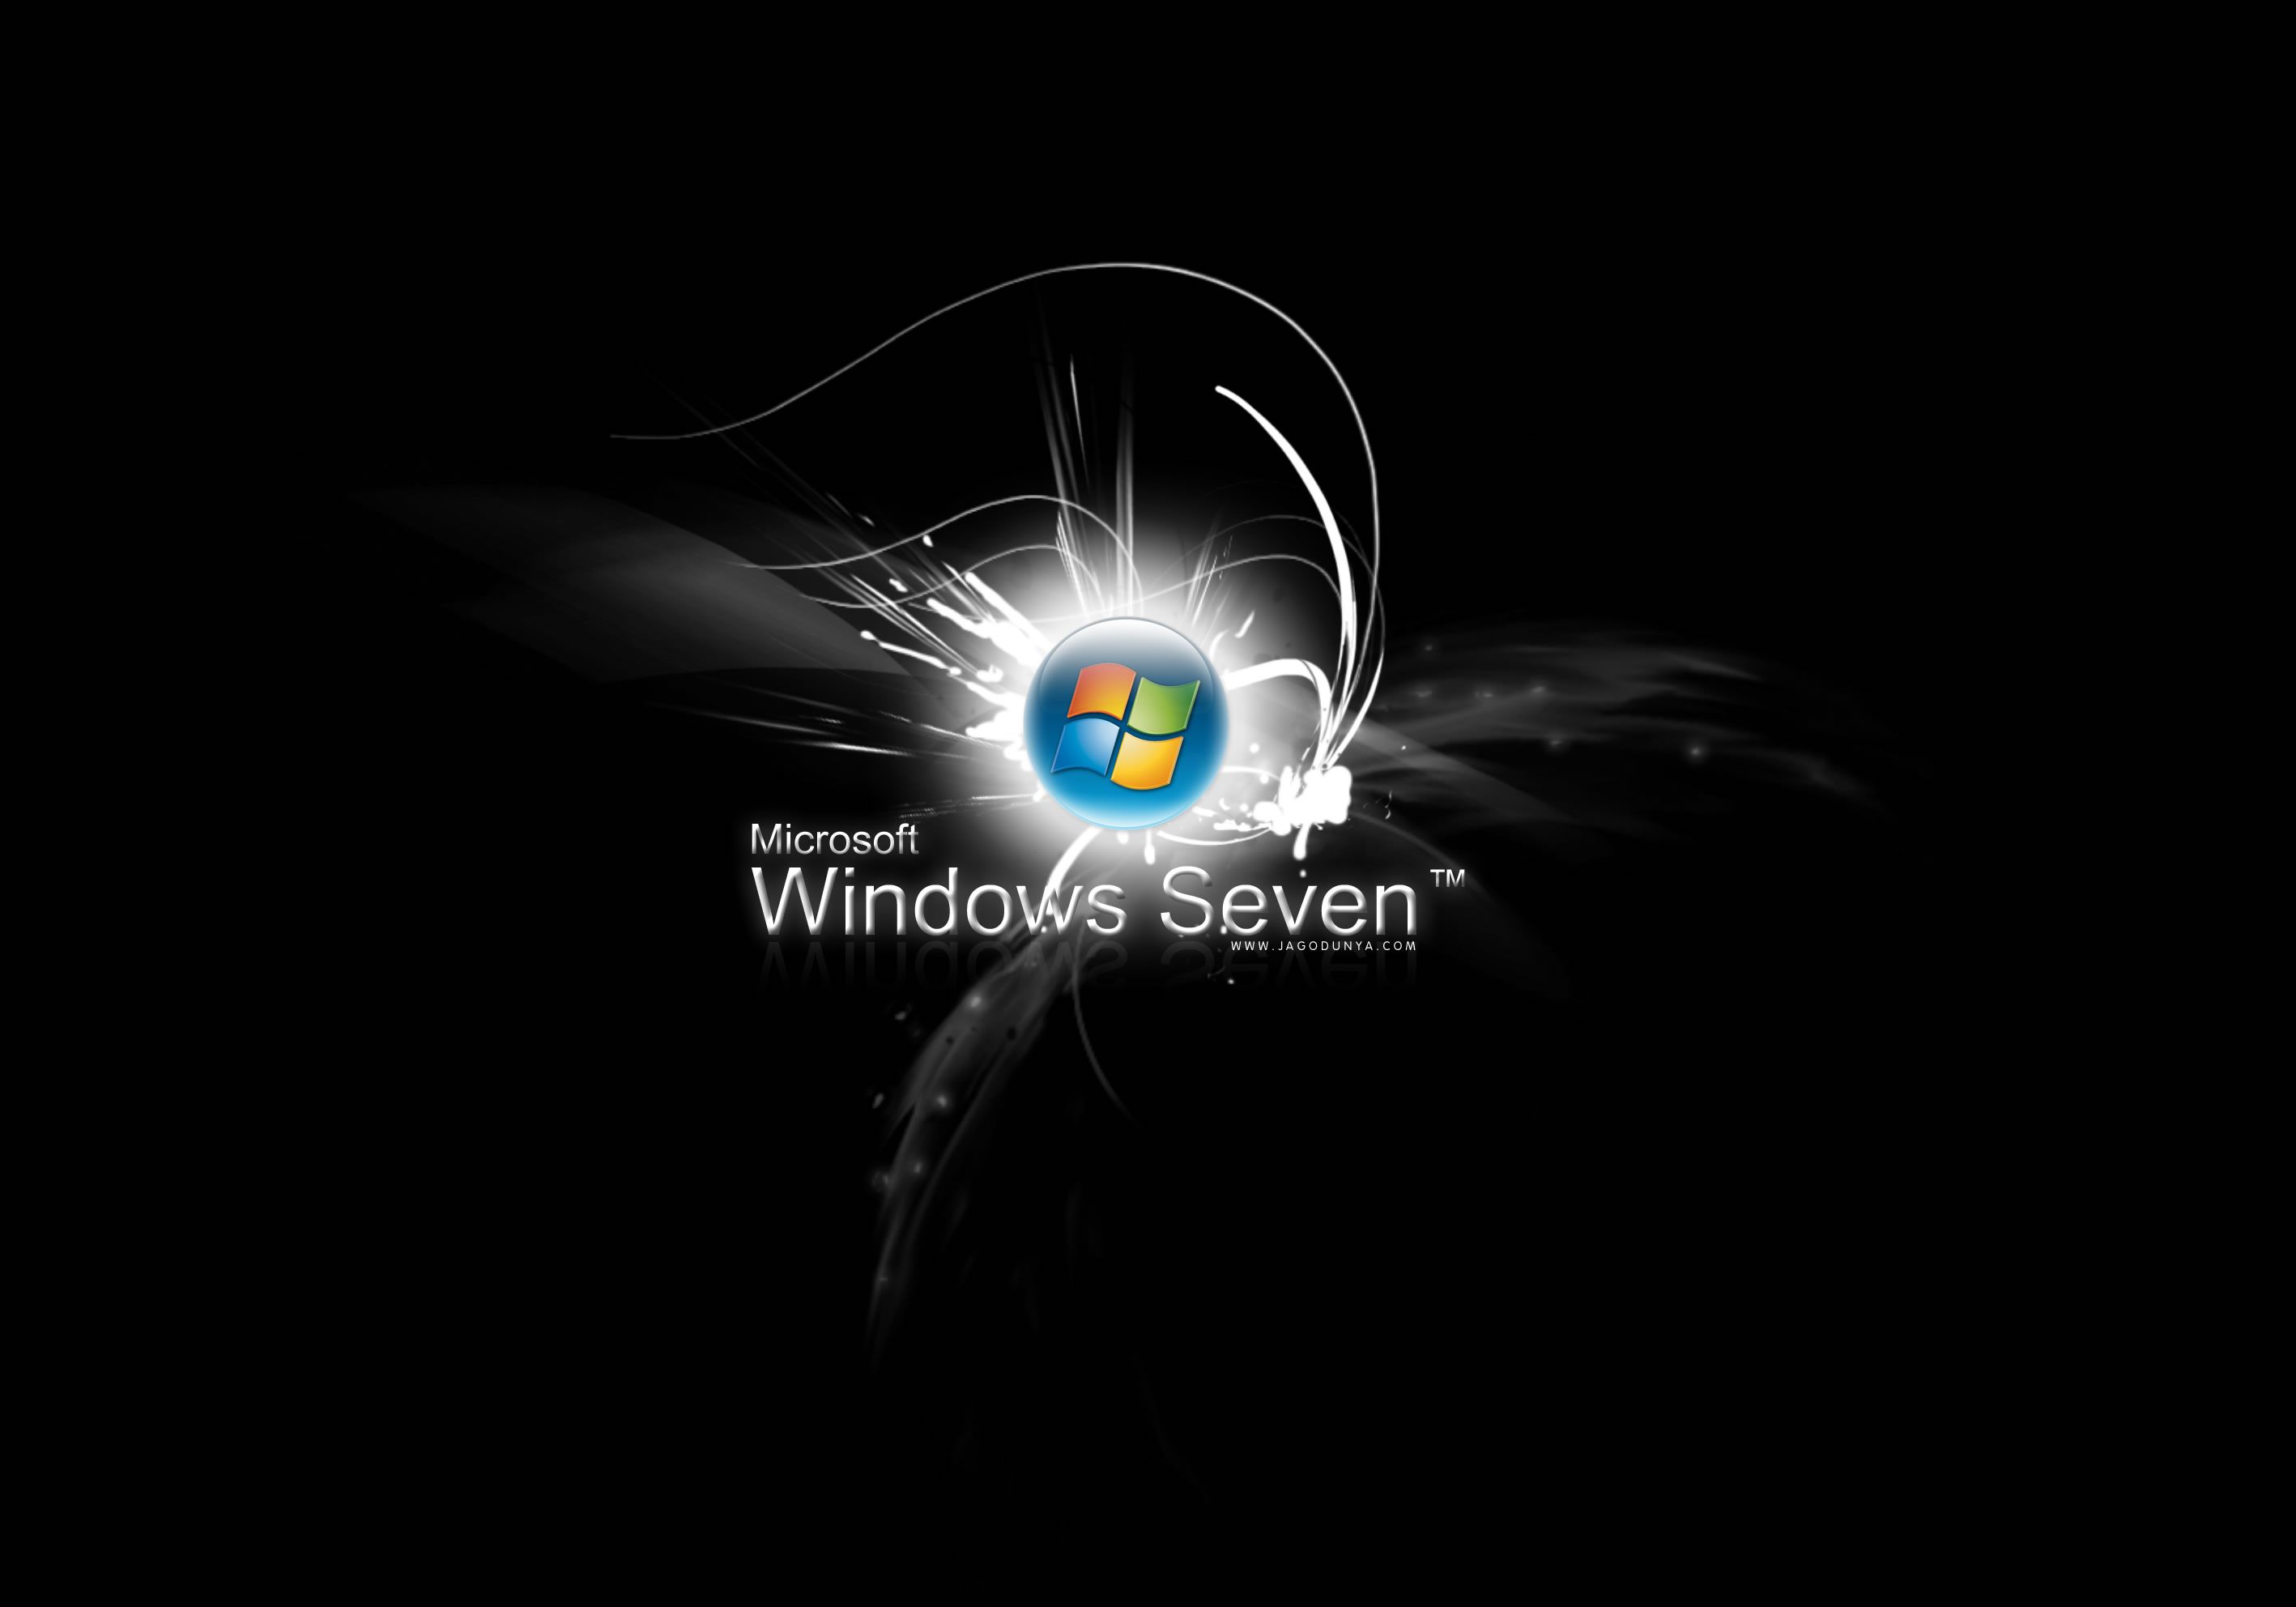 Windows7 Black - New HD Wallpapers